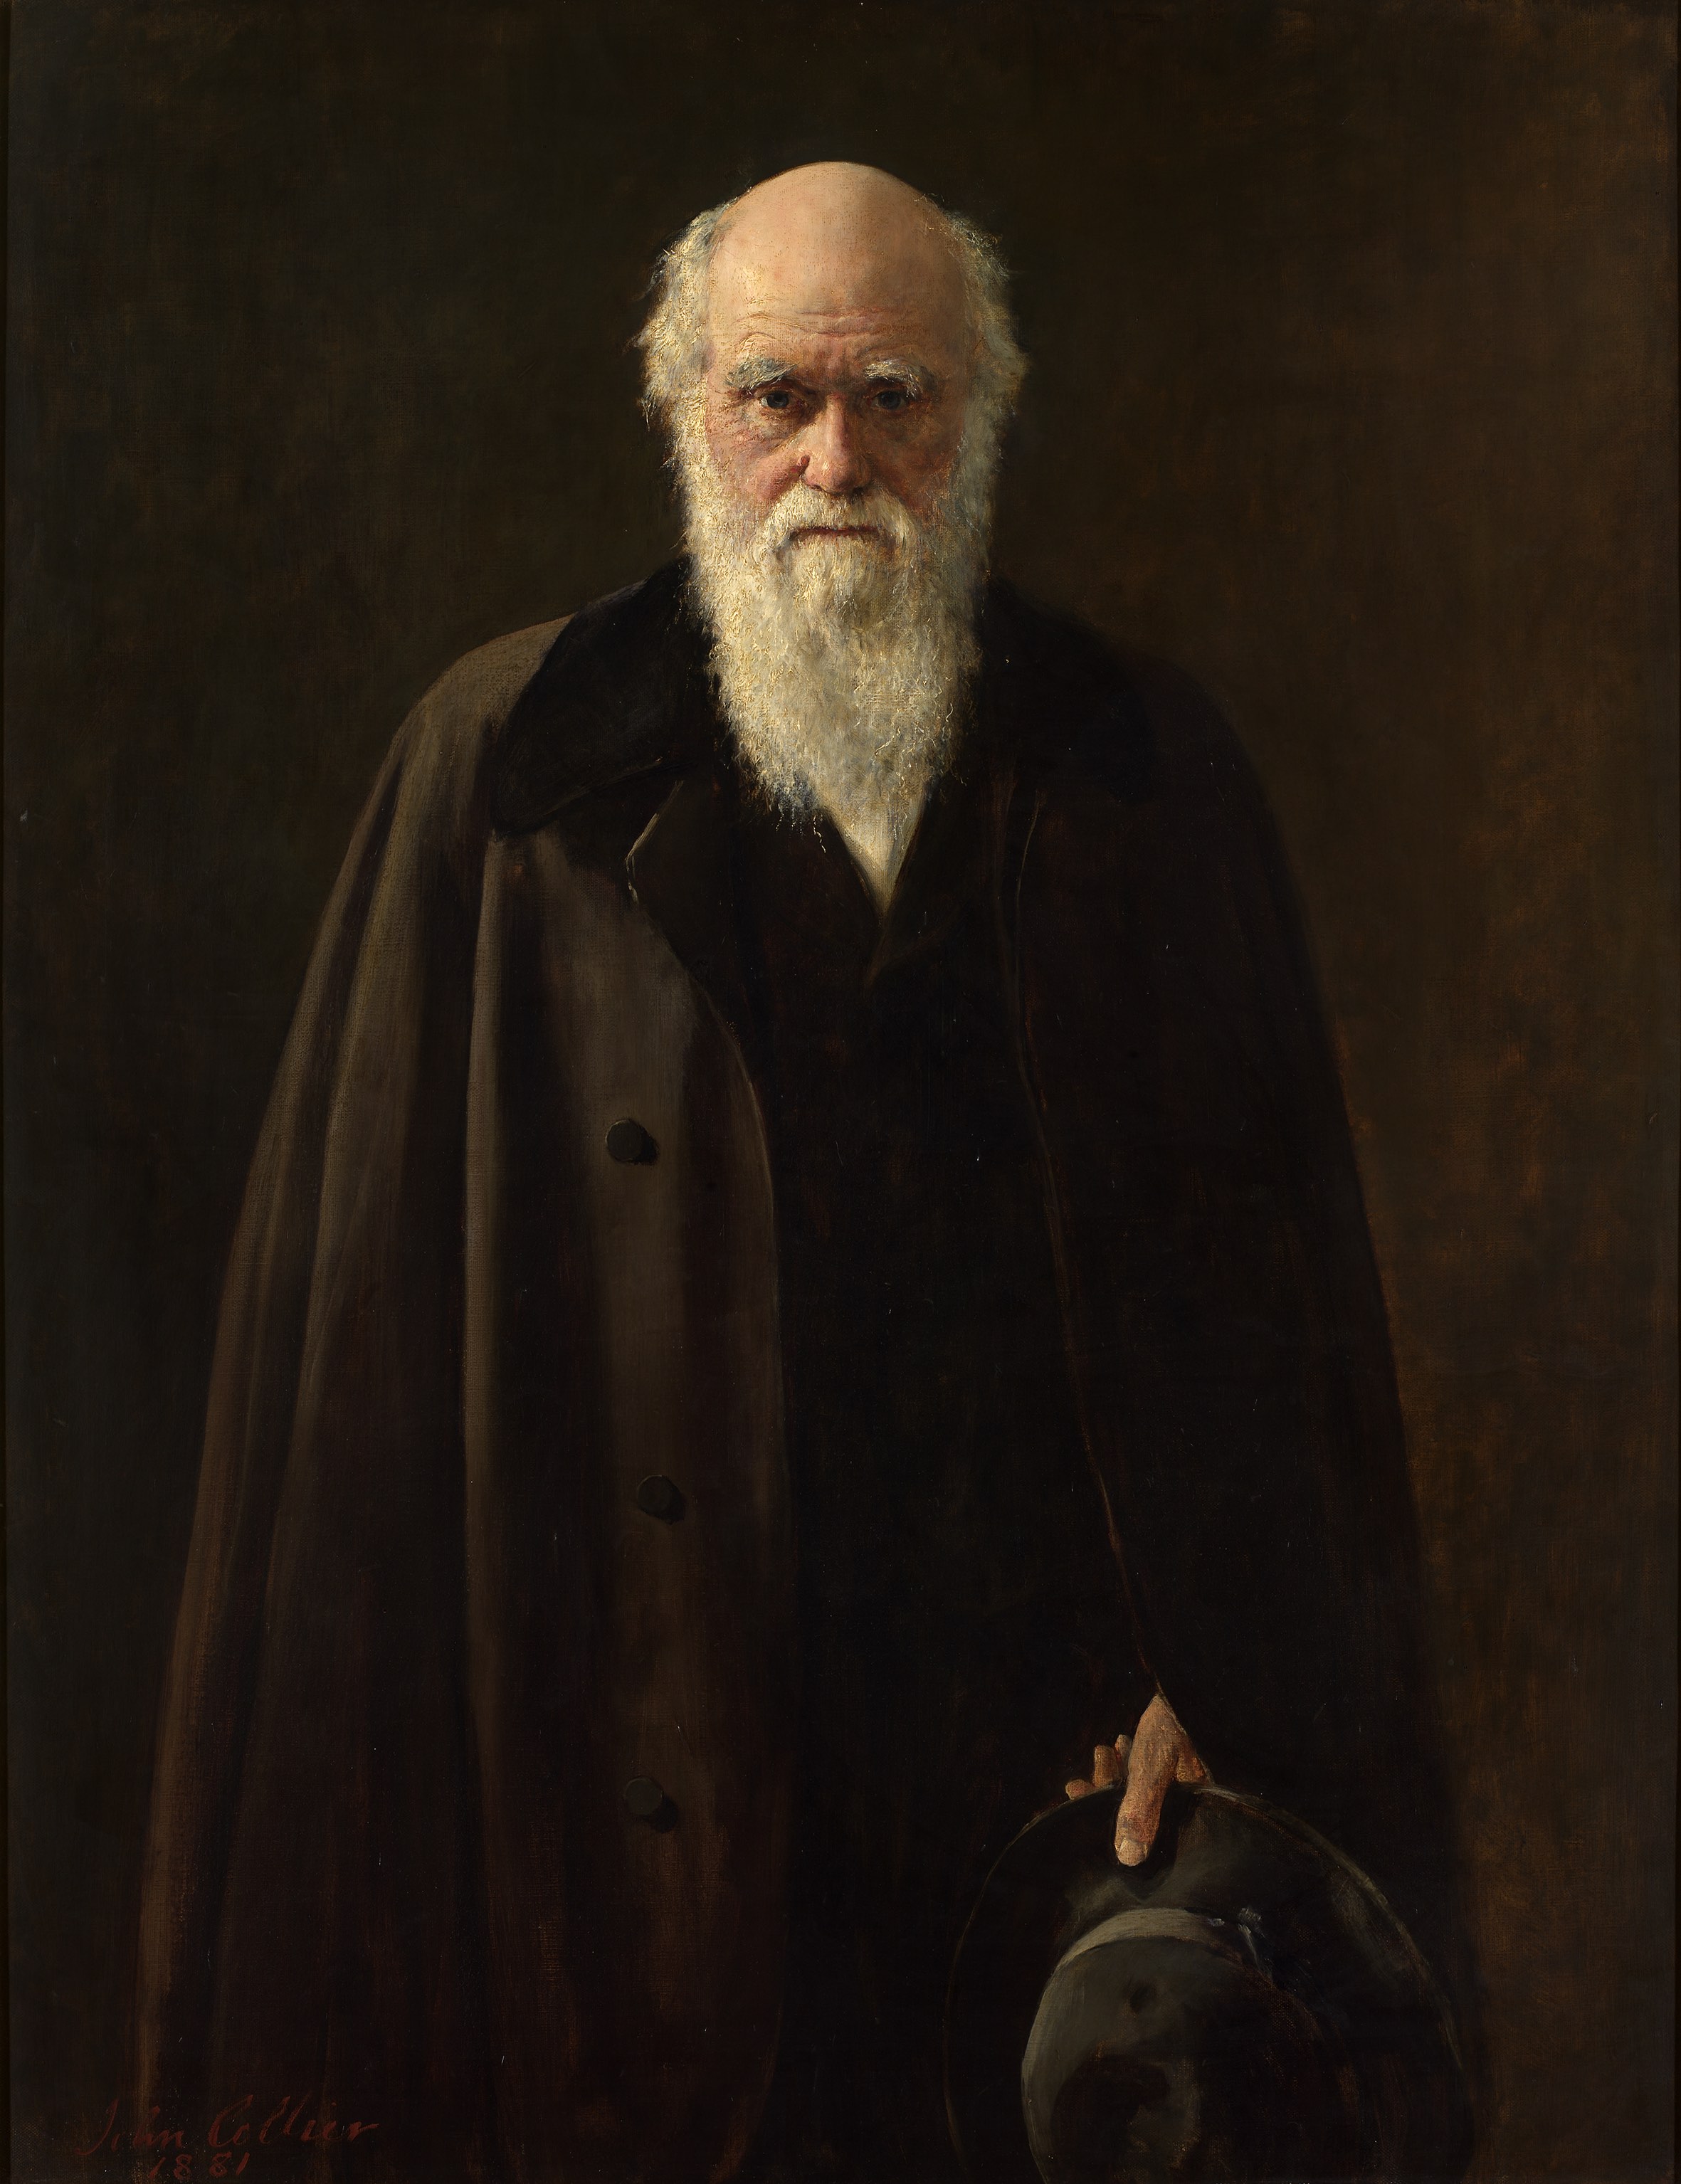 Charles Darwin by John Collier, 1881